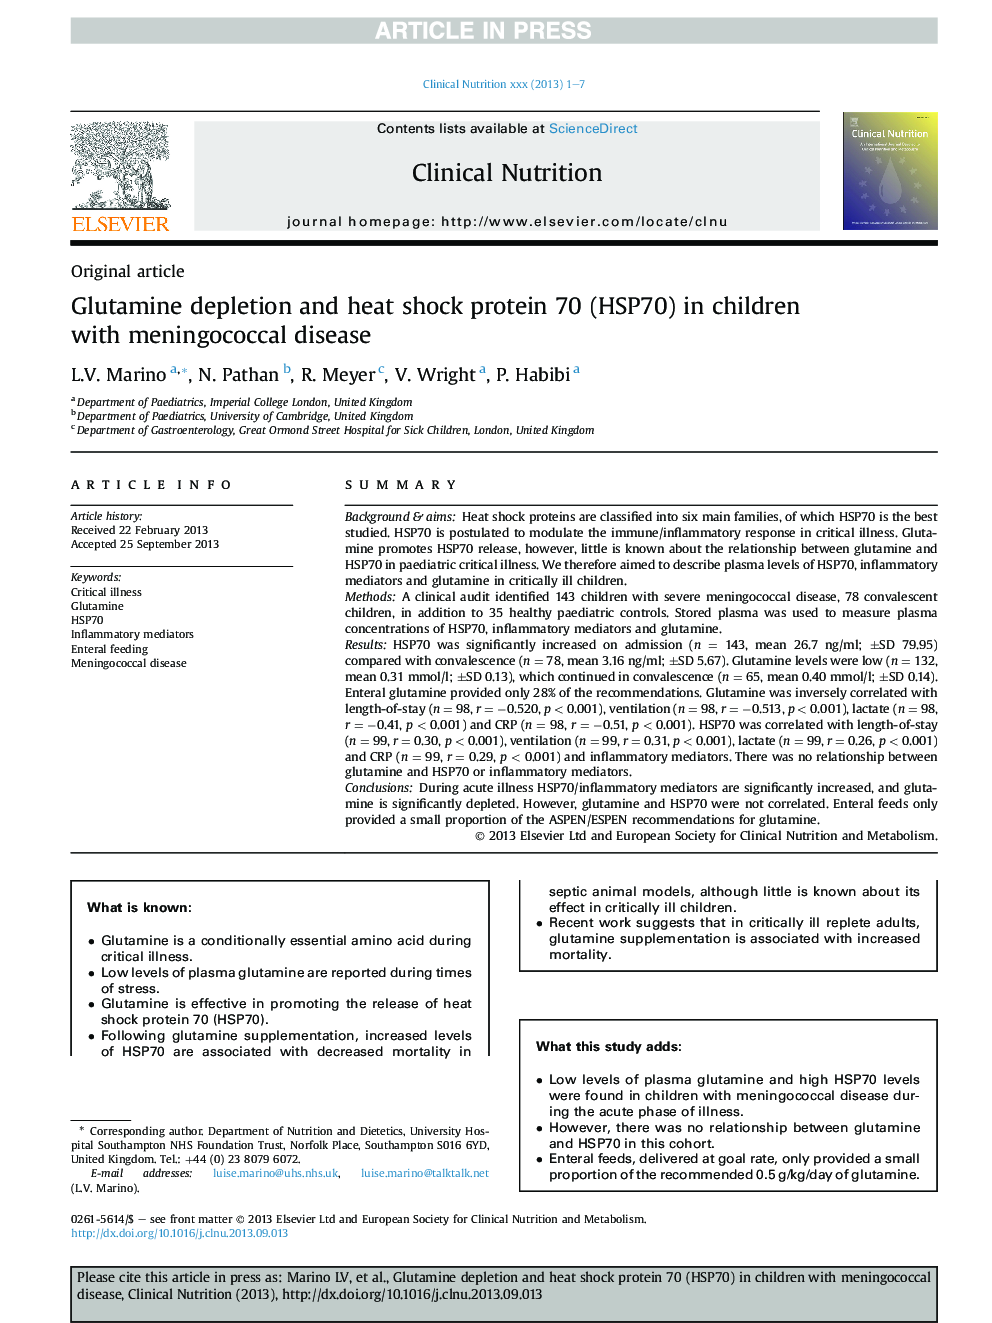 Glutamine depletion and heat shock protein 70 (HSP70) in children with meningococcal disease